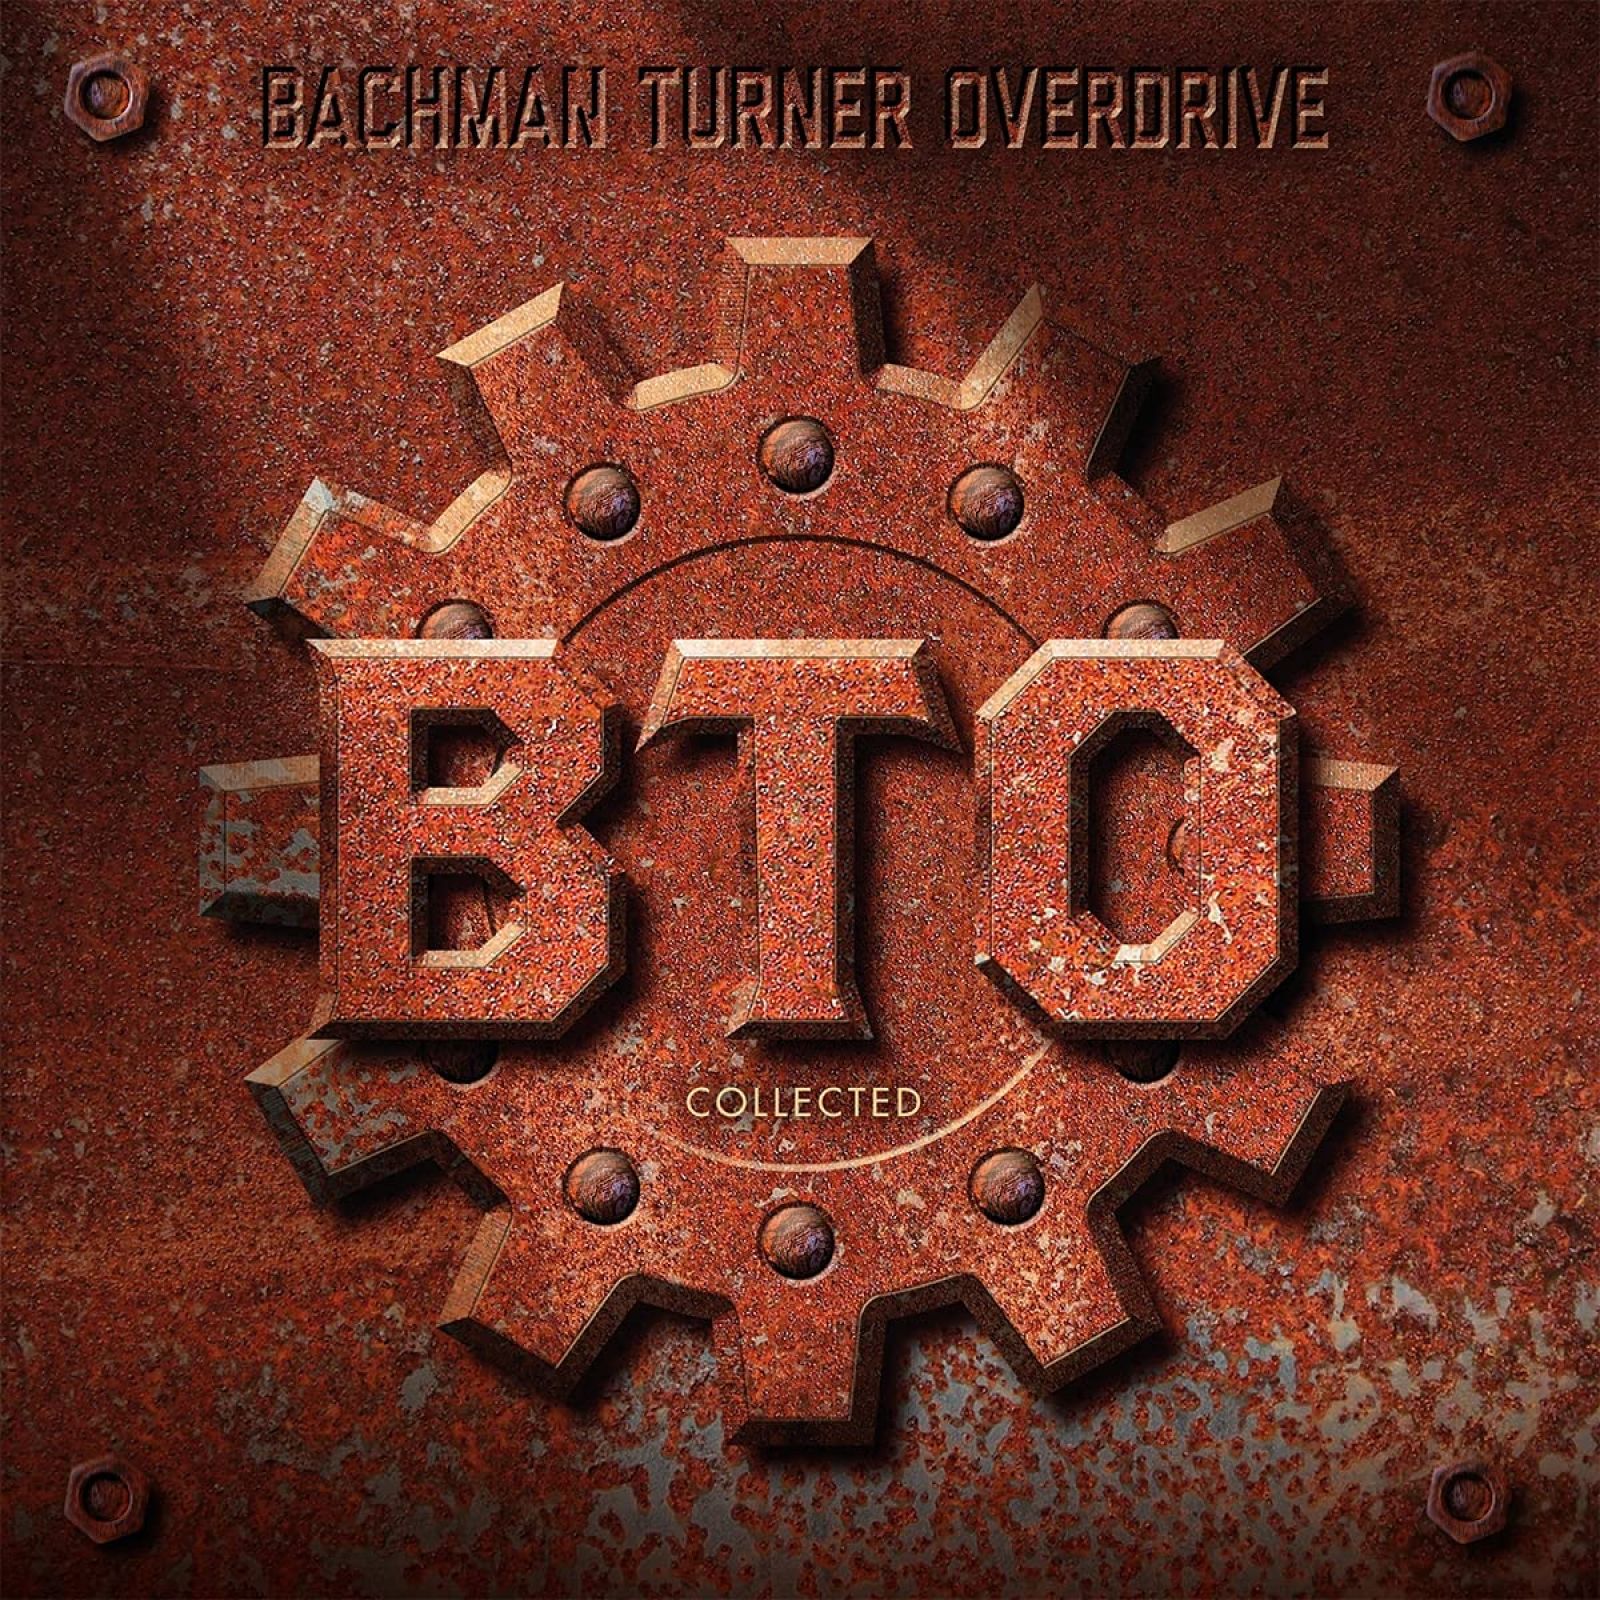 Виниловая пластинка Bachman Turner Overdrive, Collected: Greatest Songs (0600753911327) randy bachman randy bachman by george by bachman 2 lp colour